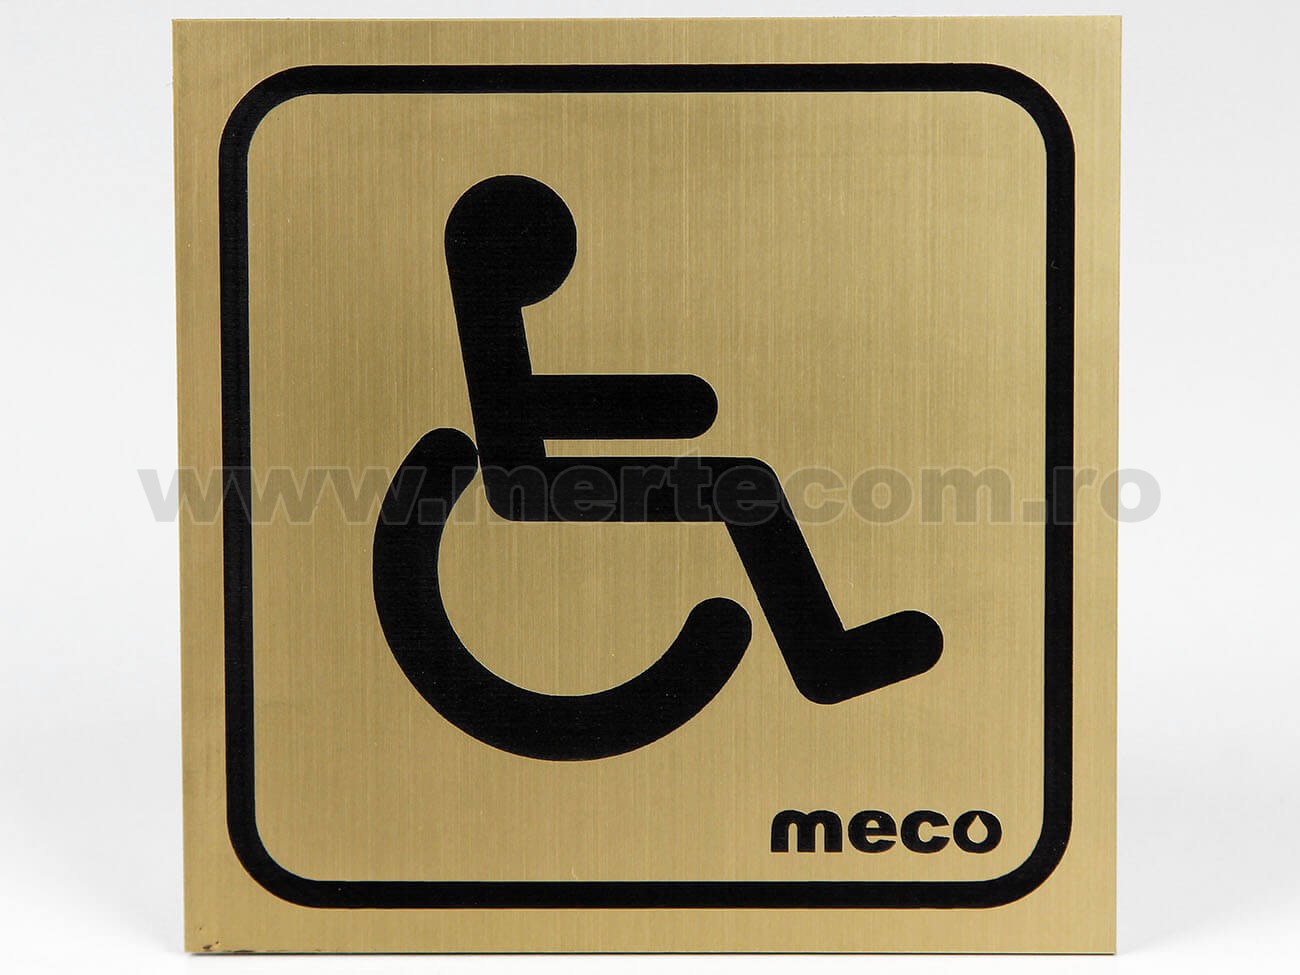 jury reform deal with Semn indicator toaleta handicap - Mertecom.ro